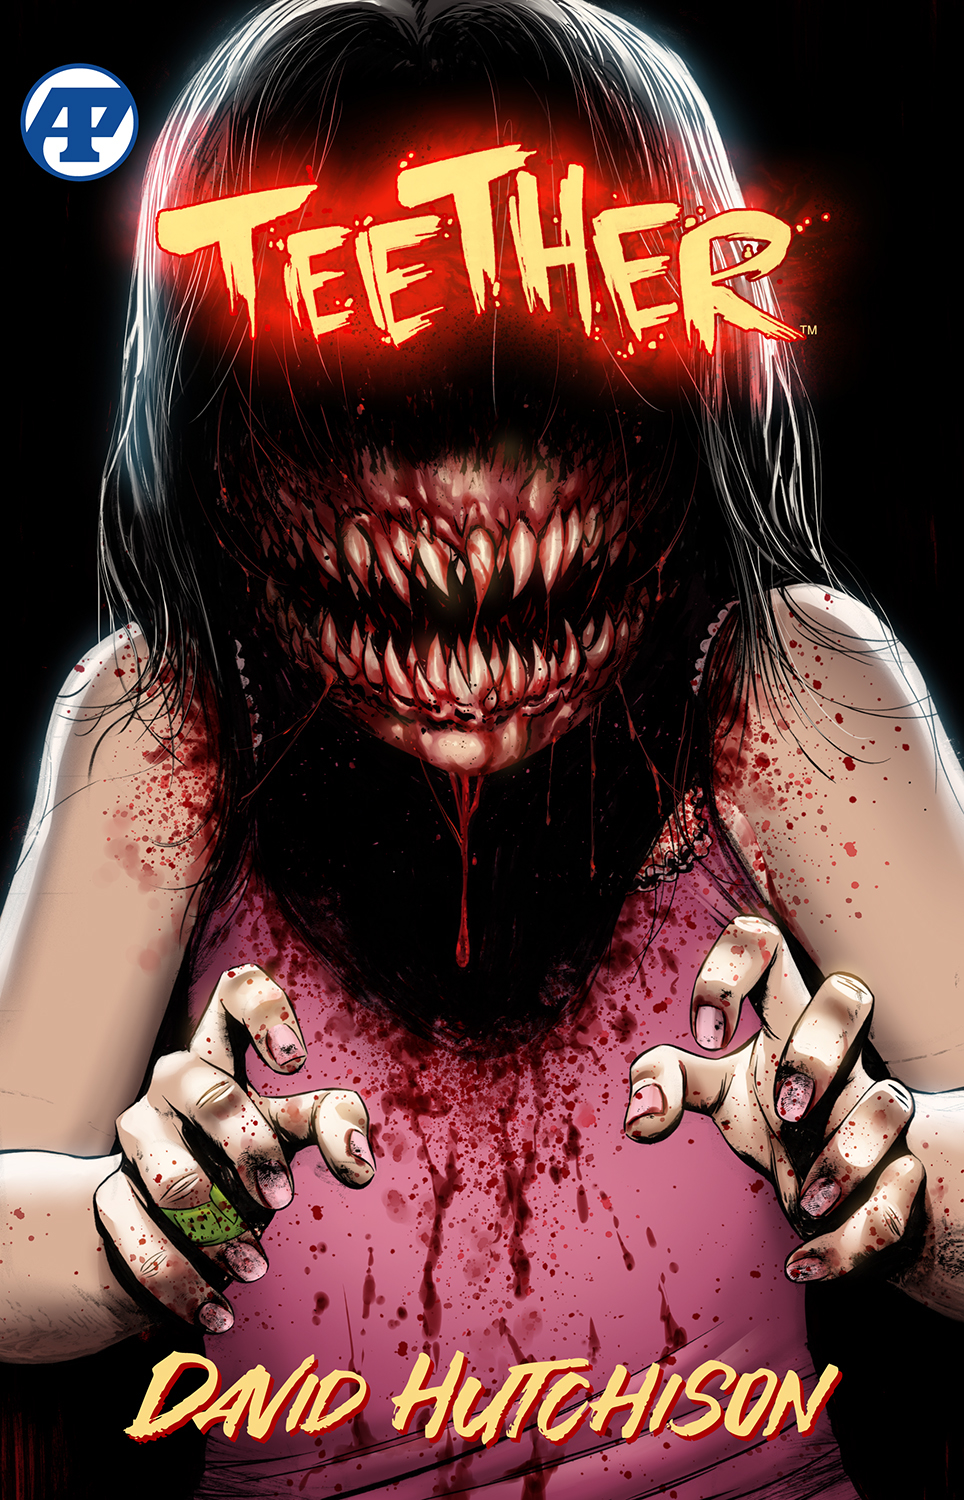 Teether Graphic Novel Big Bite Signed